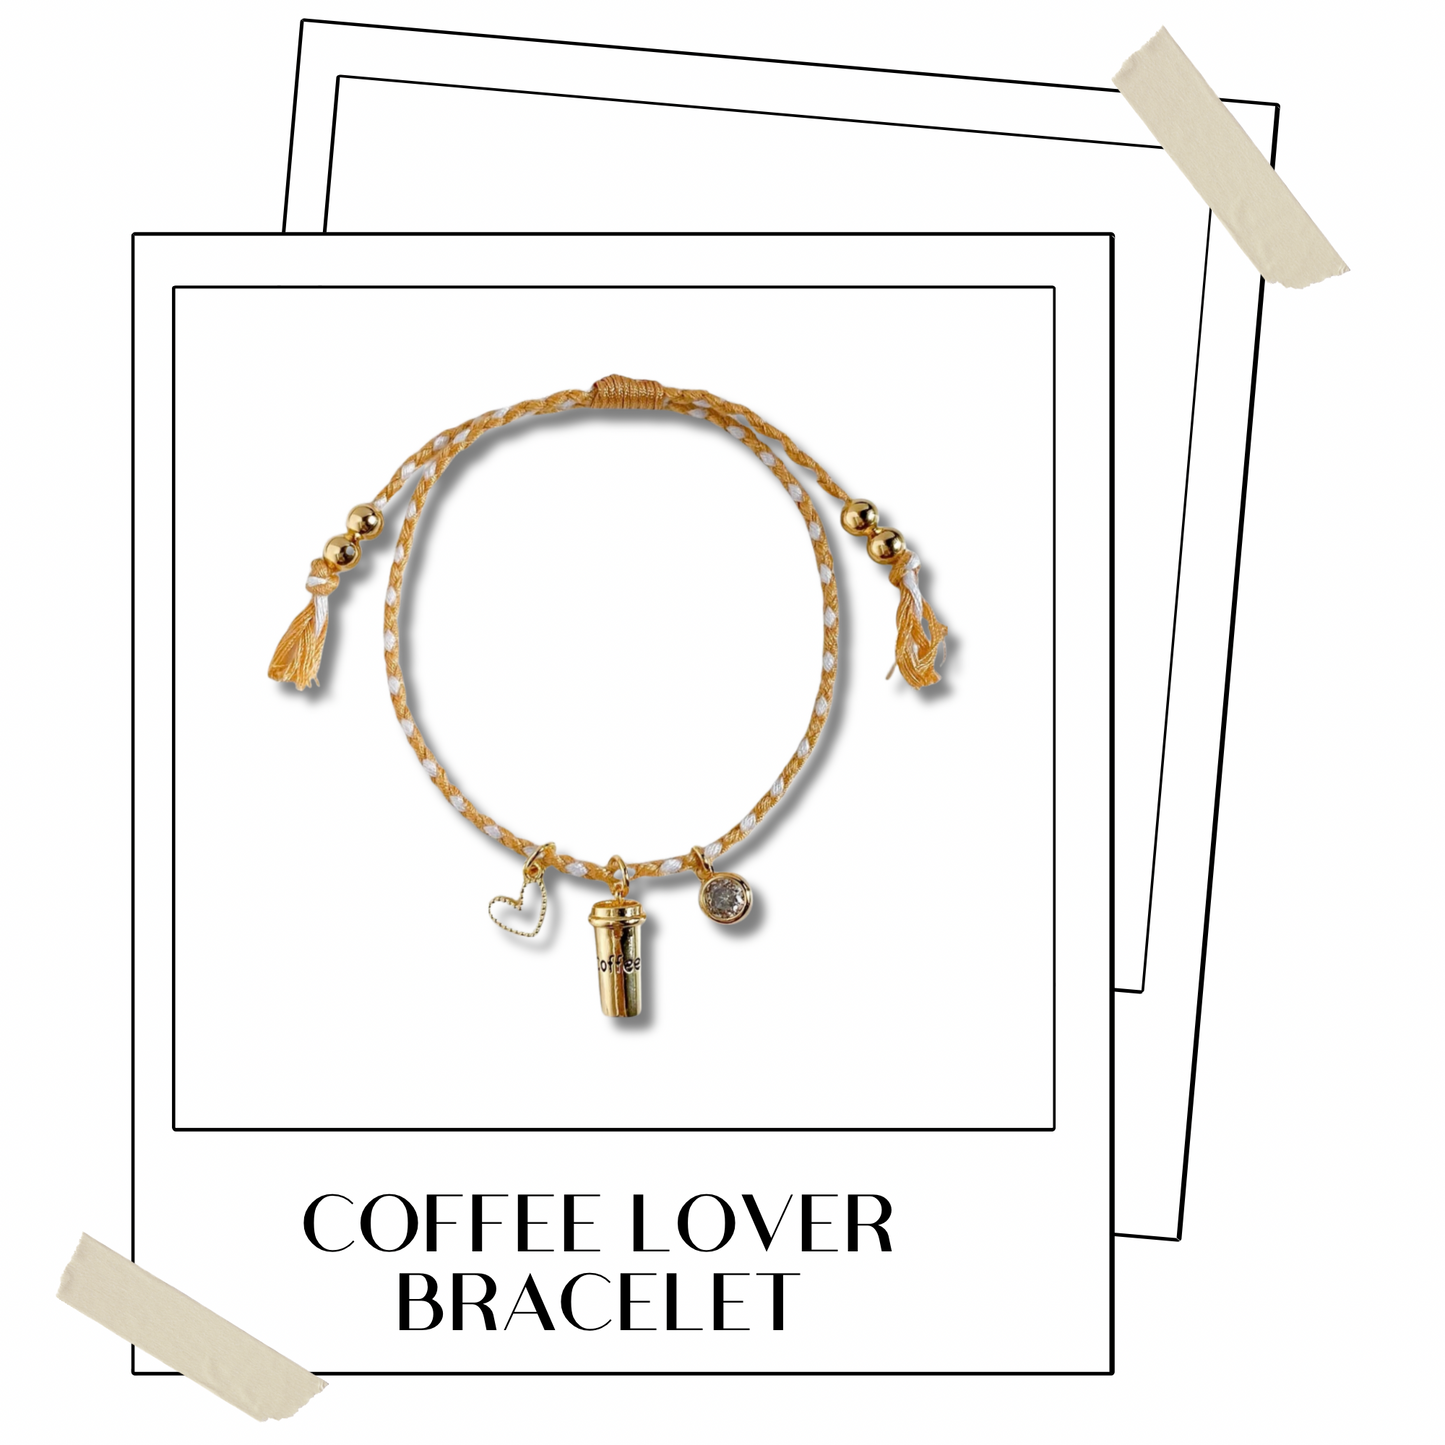 Coffee lover bracelet